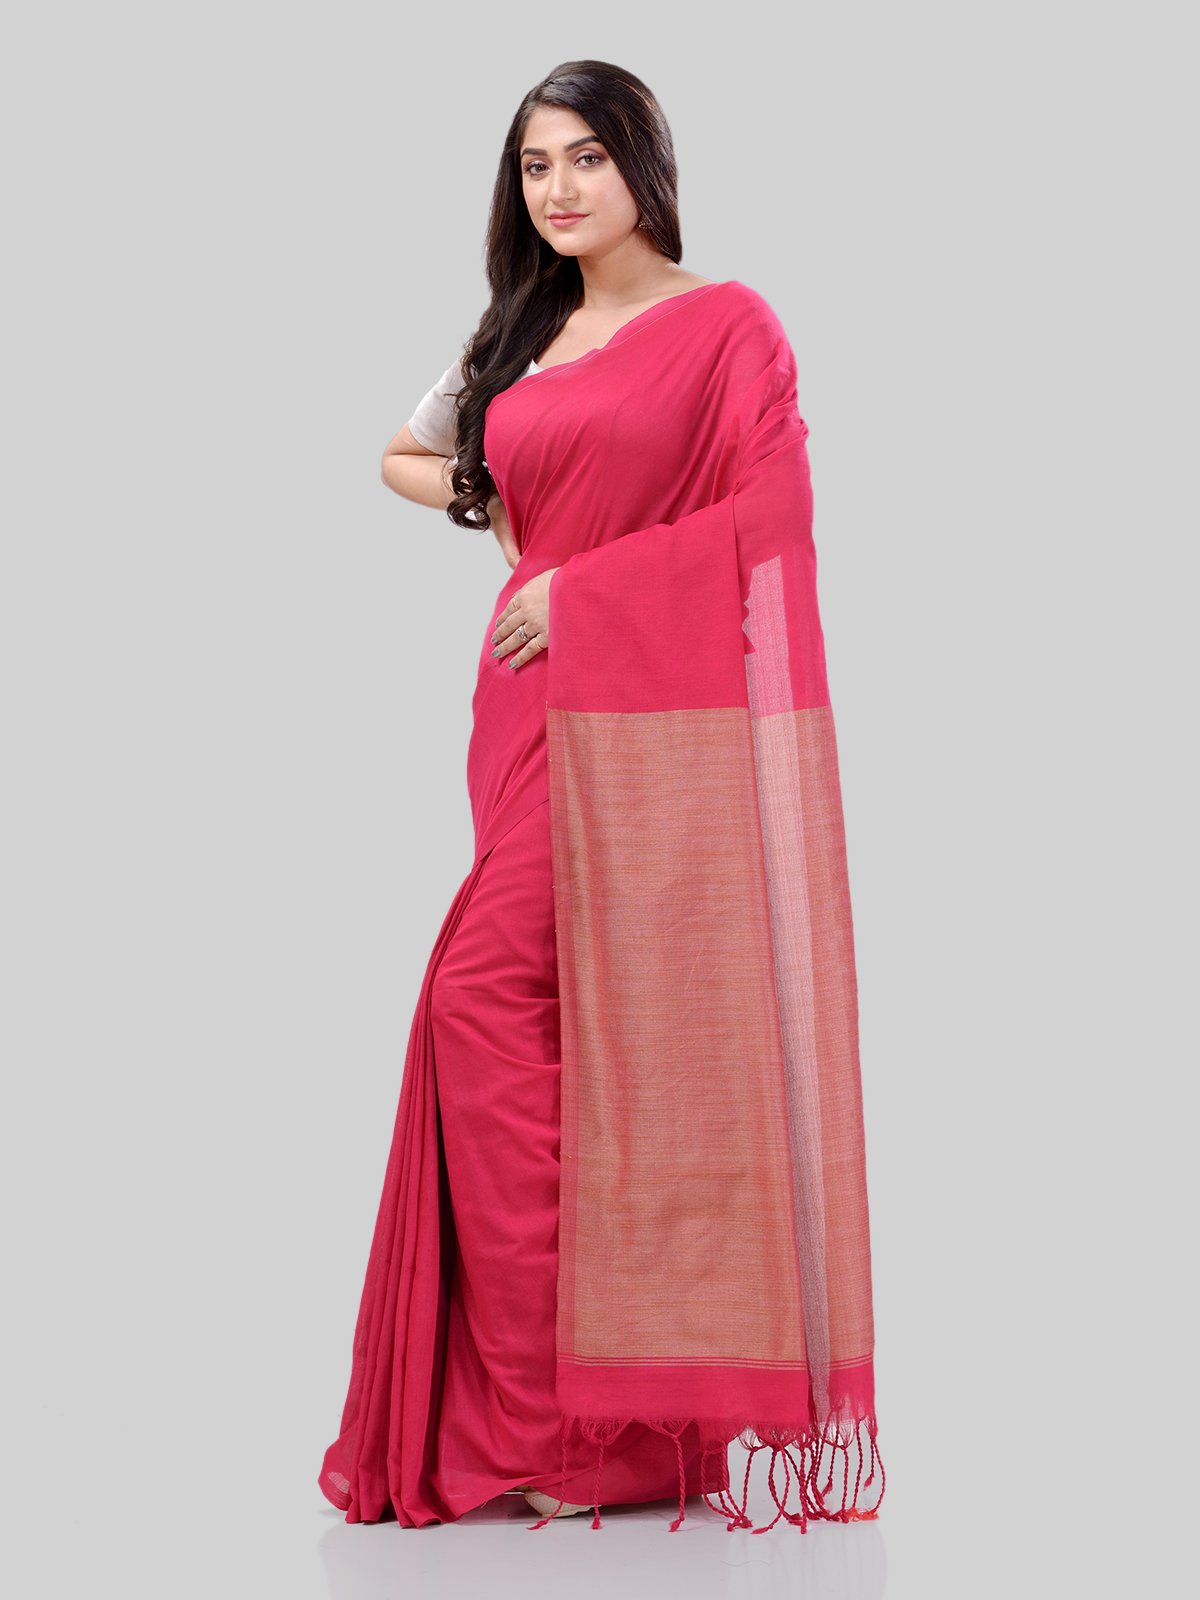 Khadi Cotton Handloom Pink Saree